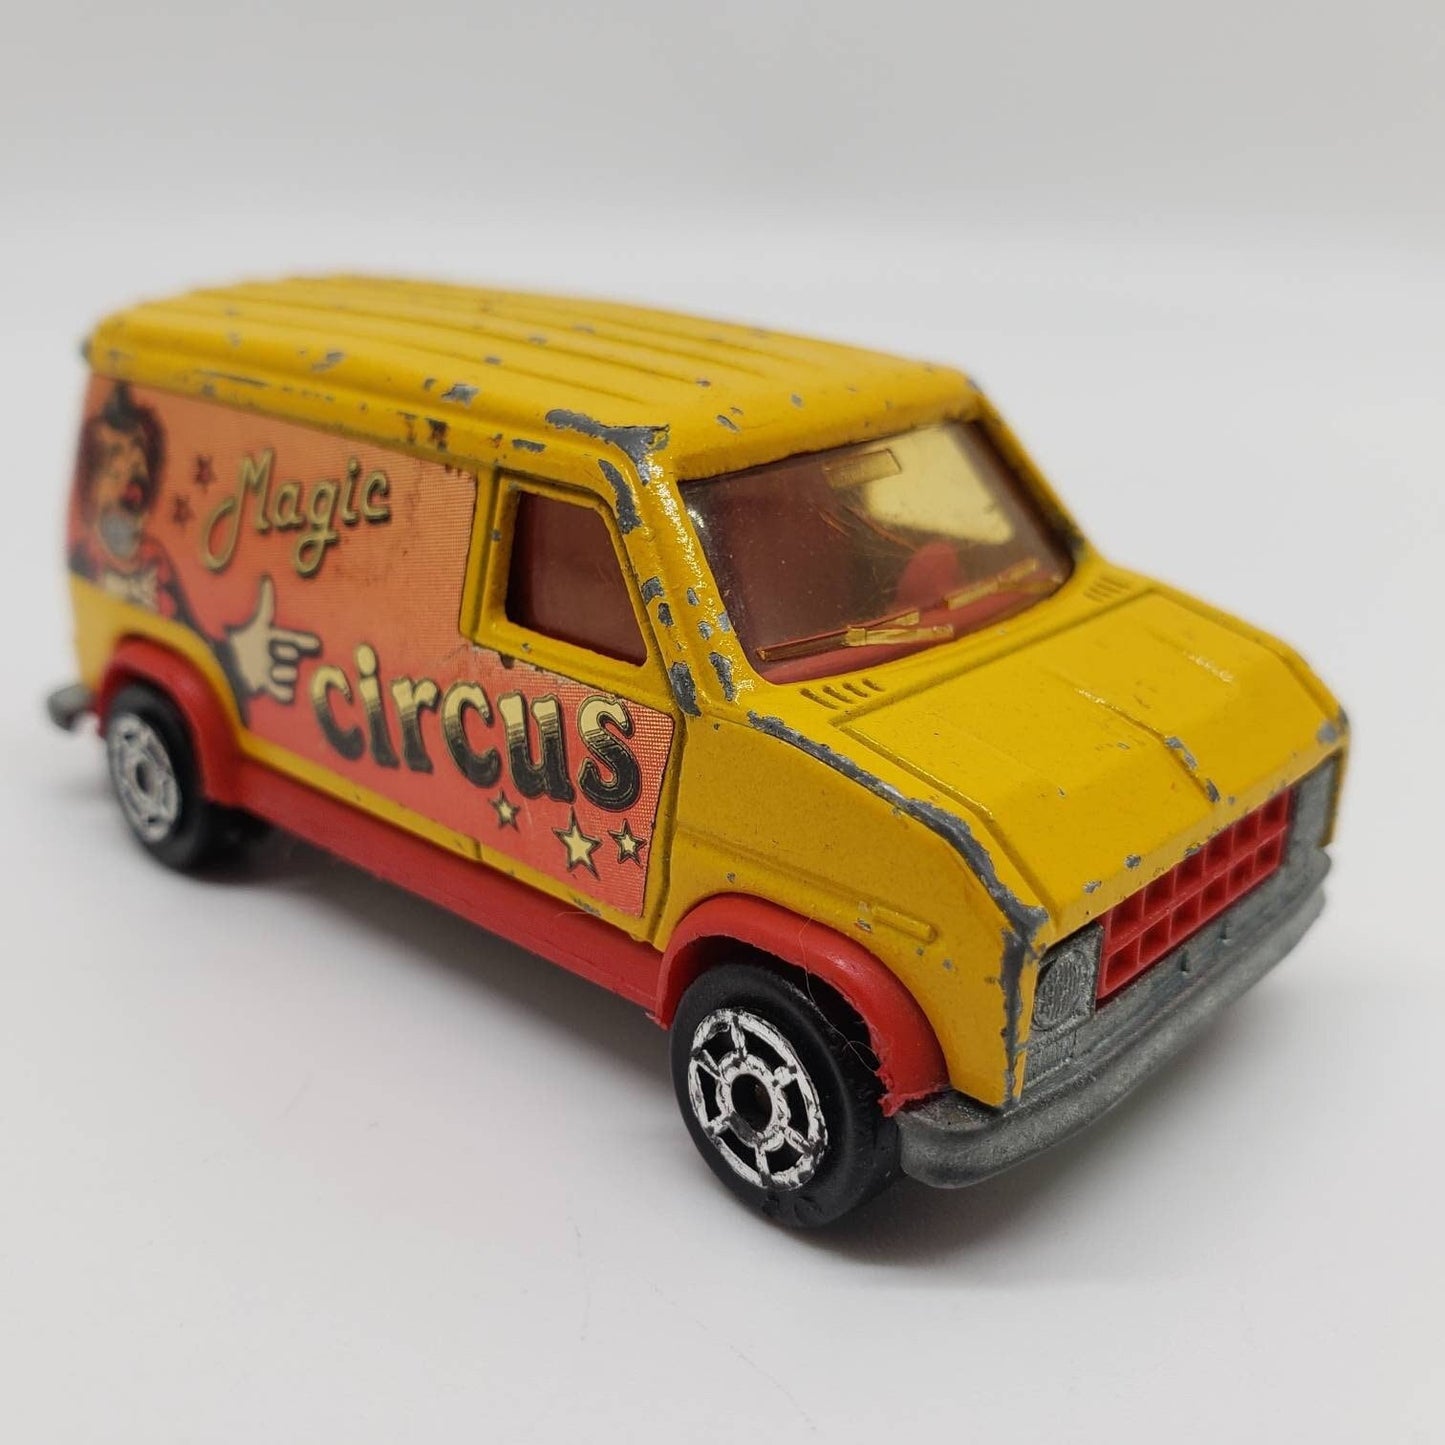 Majorette Ford E-350 Fourgon Circus Magic Van Yellow Miniature Collectible 164 Scale Model Toy Car